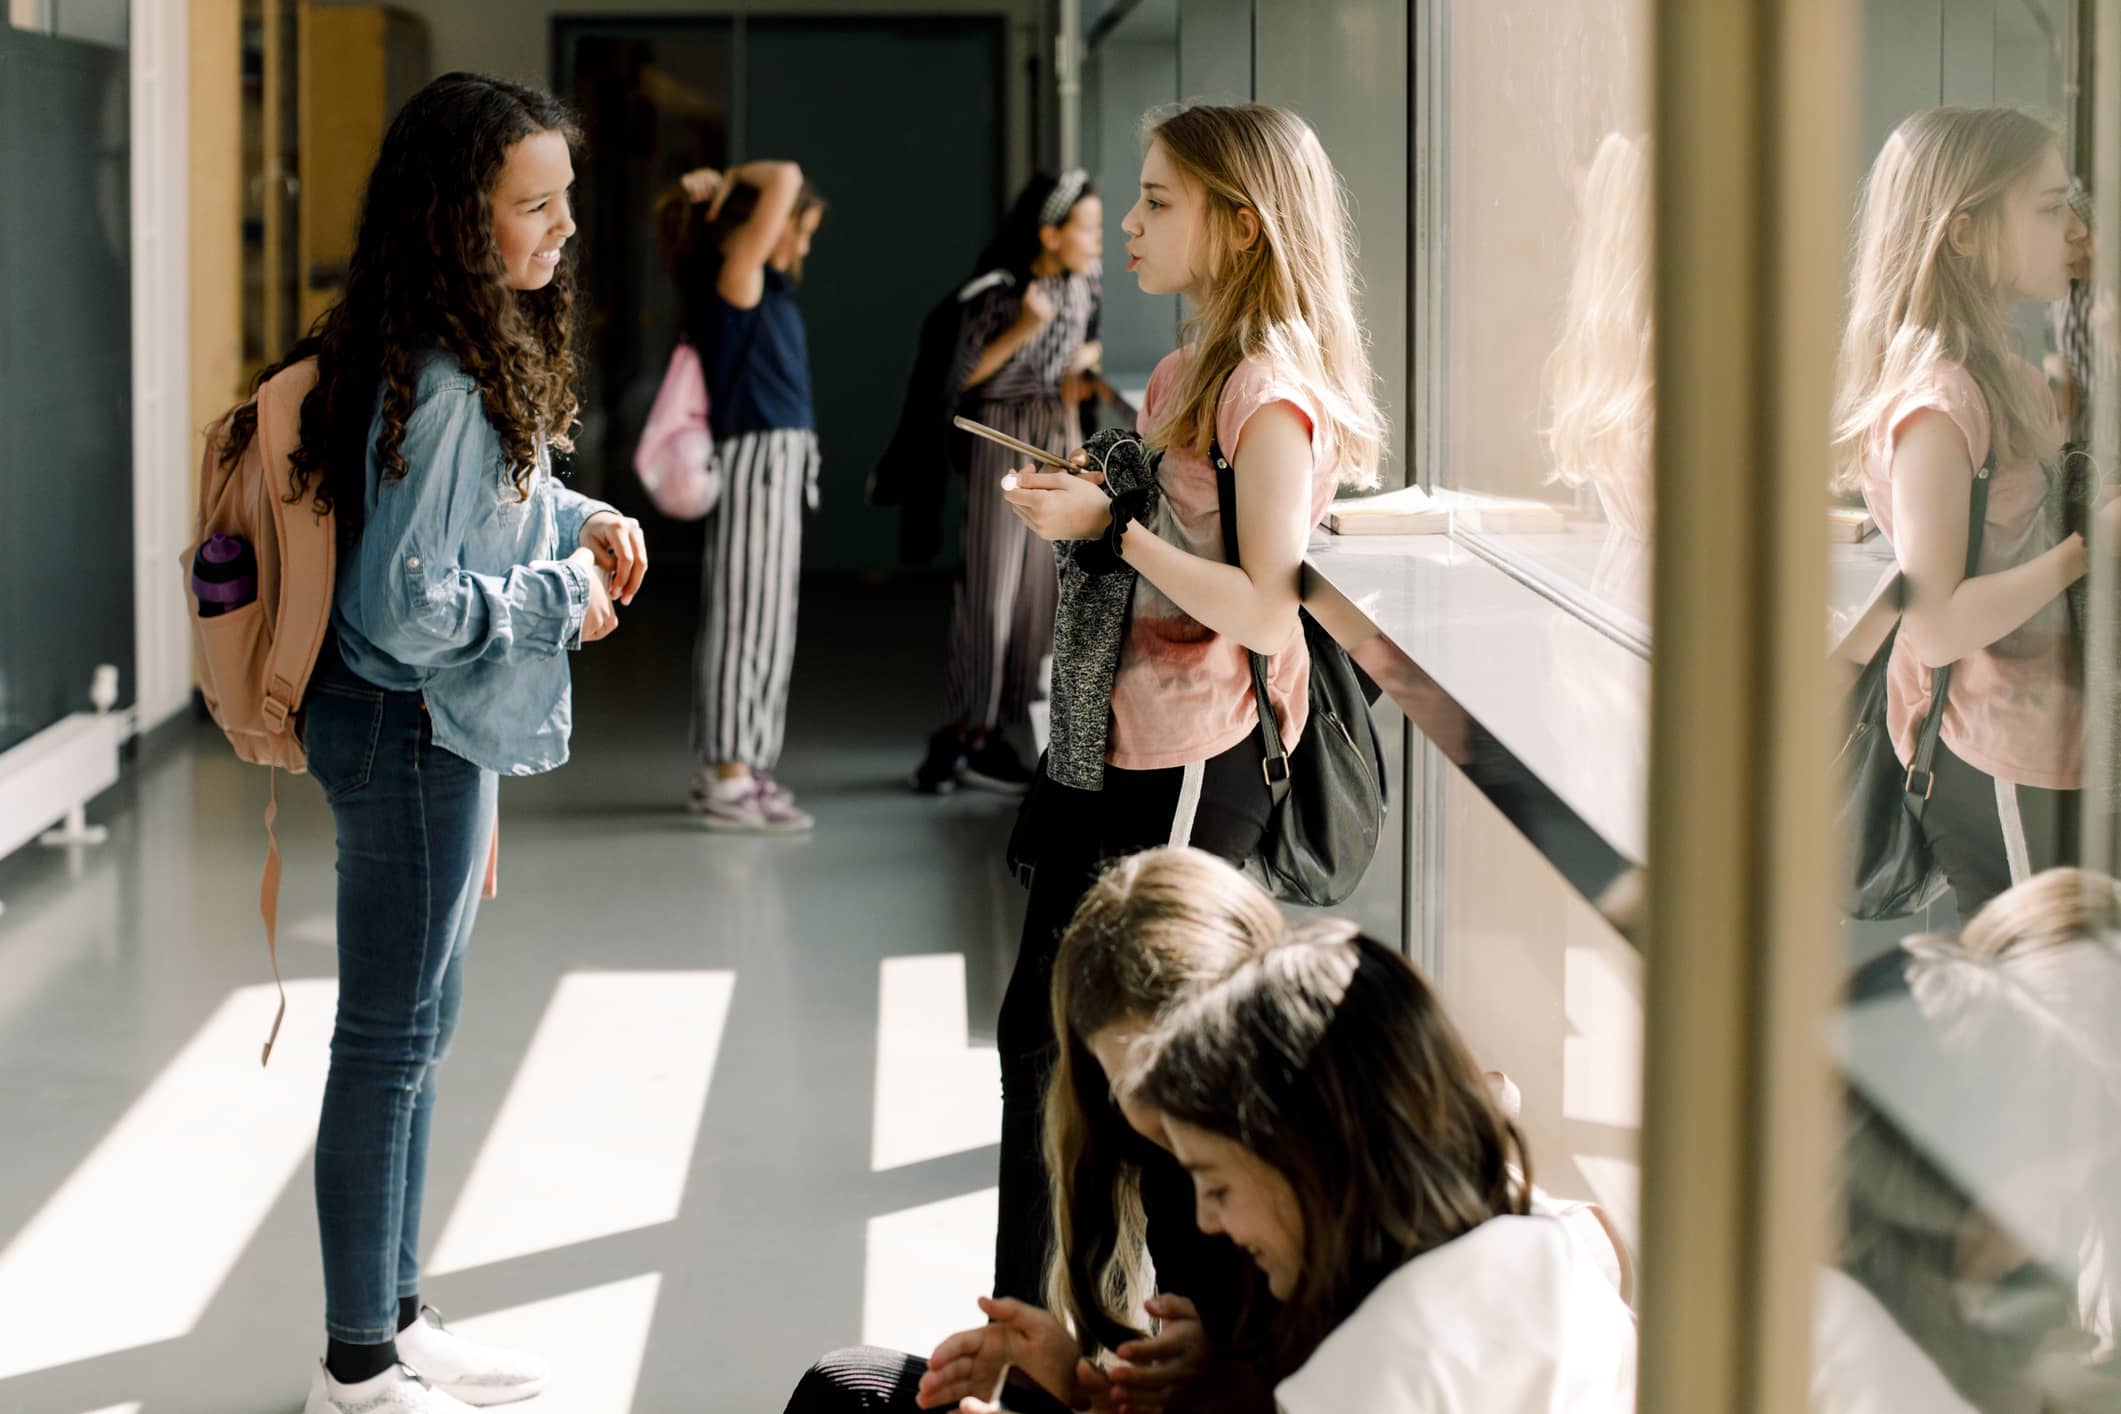 Students talking in front of window in school hallway